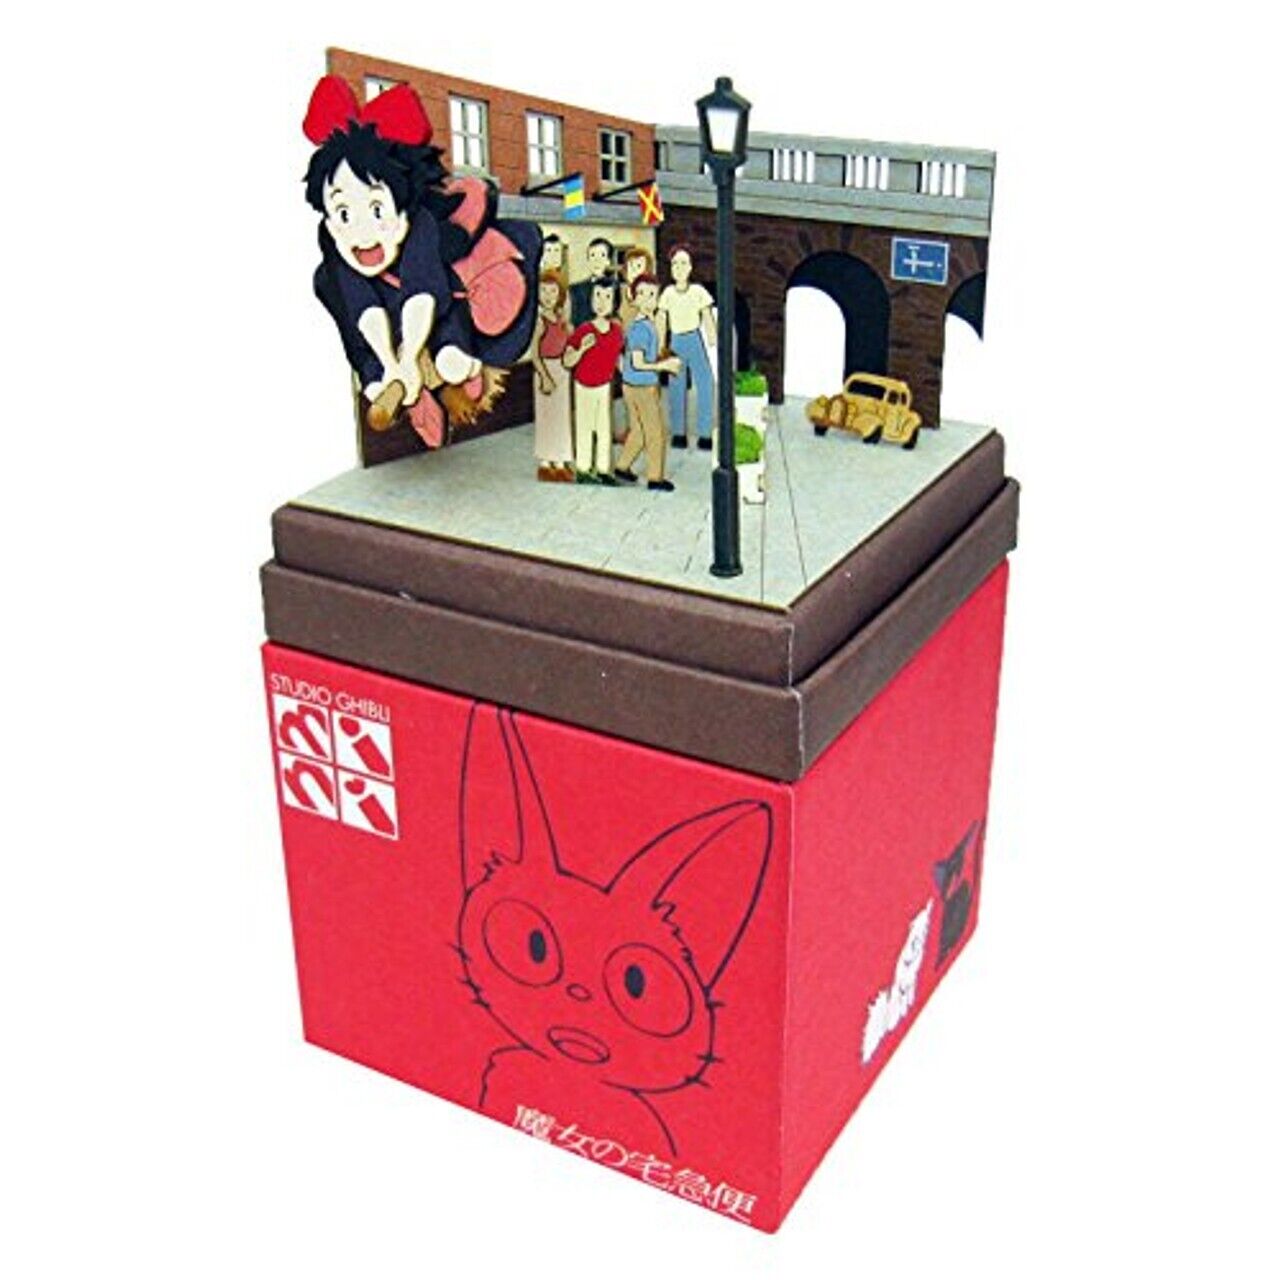 Miniatuart Kit Studio Ghibli - Kiki’s Delivery Service with Sankei Display Case